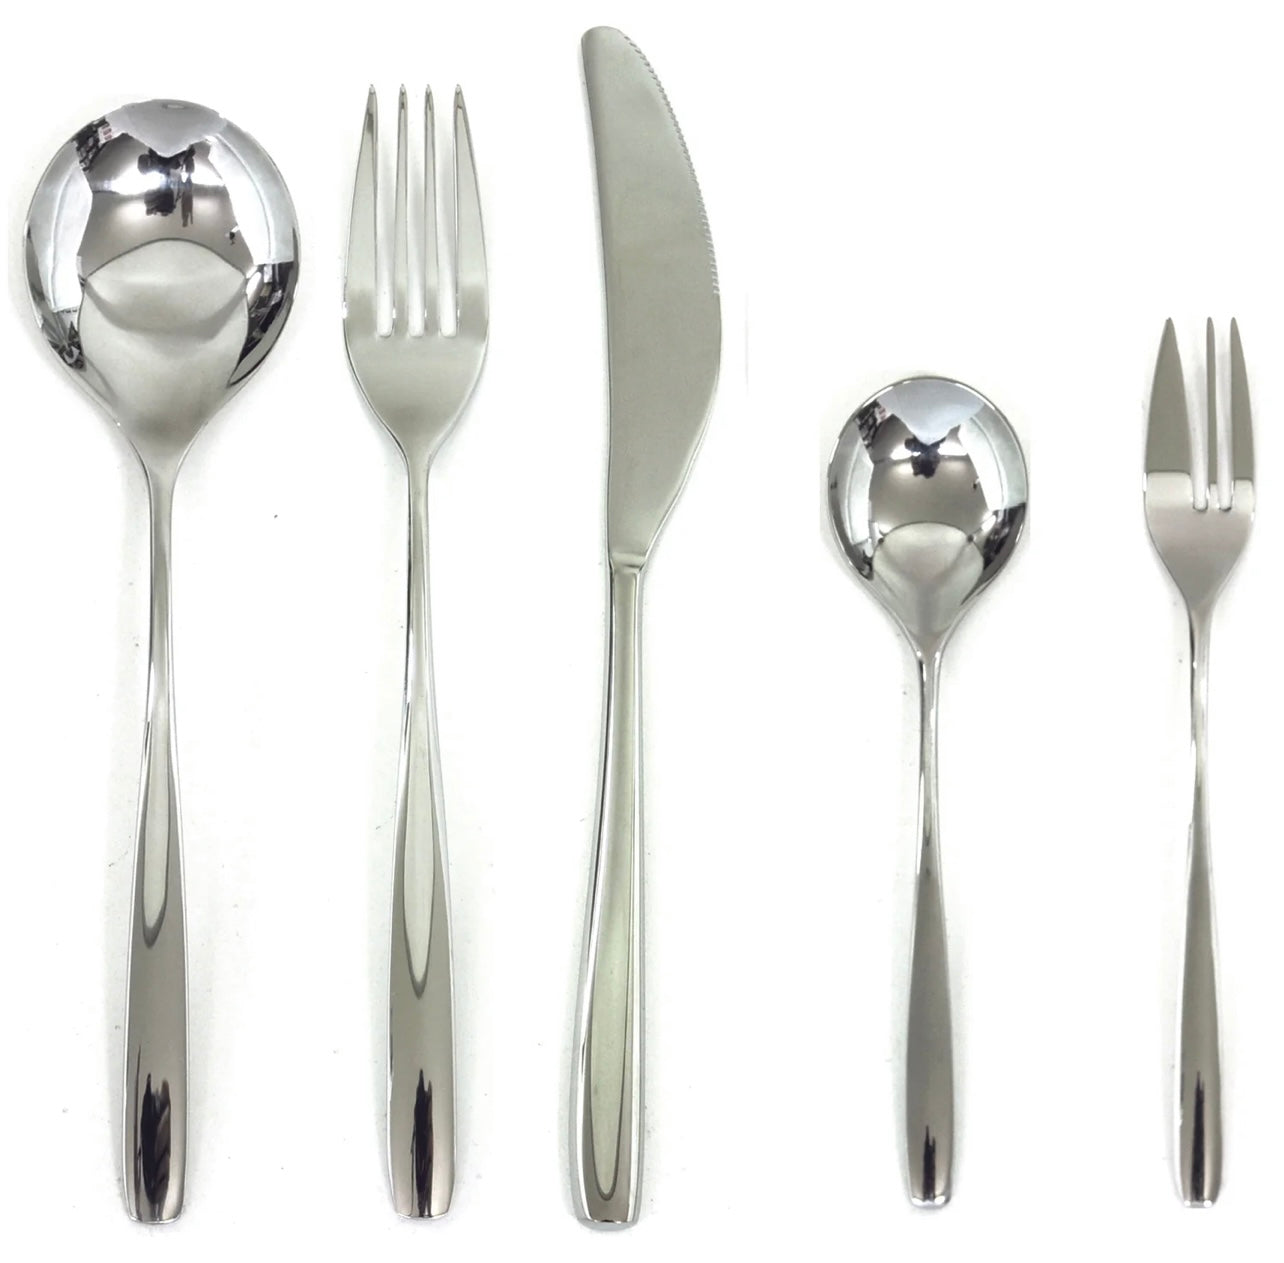 Item: Mepra Cutlery Set -30 Pieces -Stainless Steel 18/10